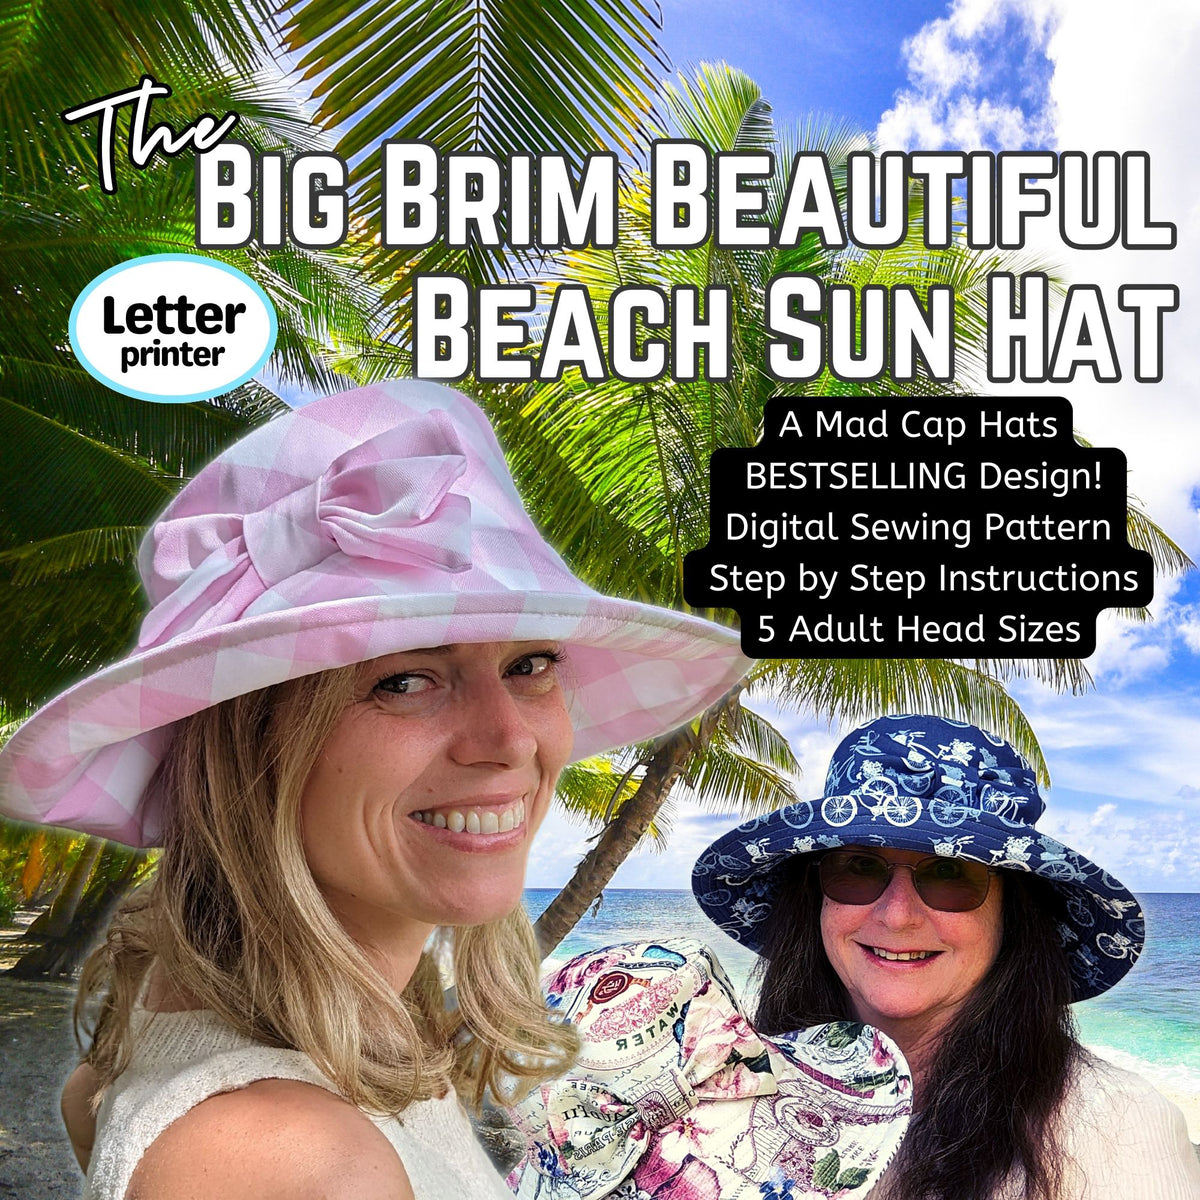 Big Brim Beautiful Beach Sun Hat, sewing pattern and instructions, digital format